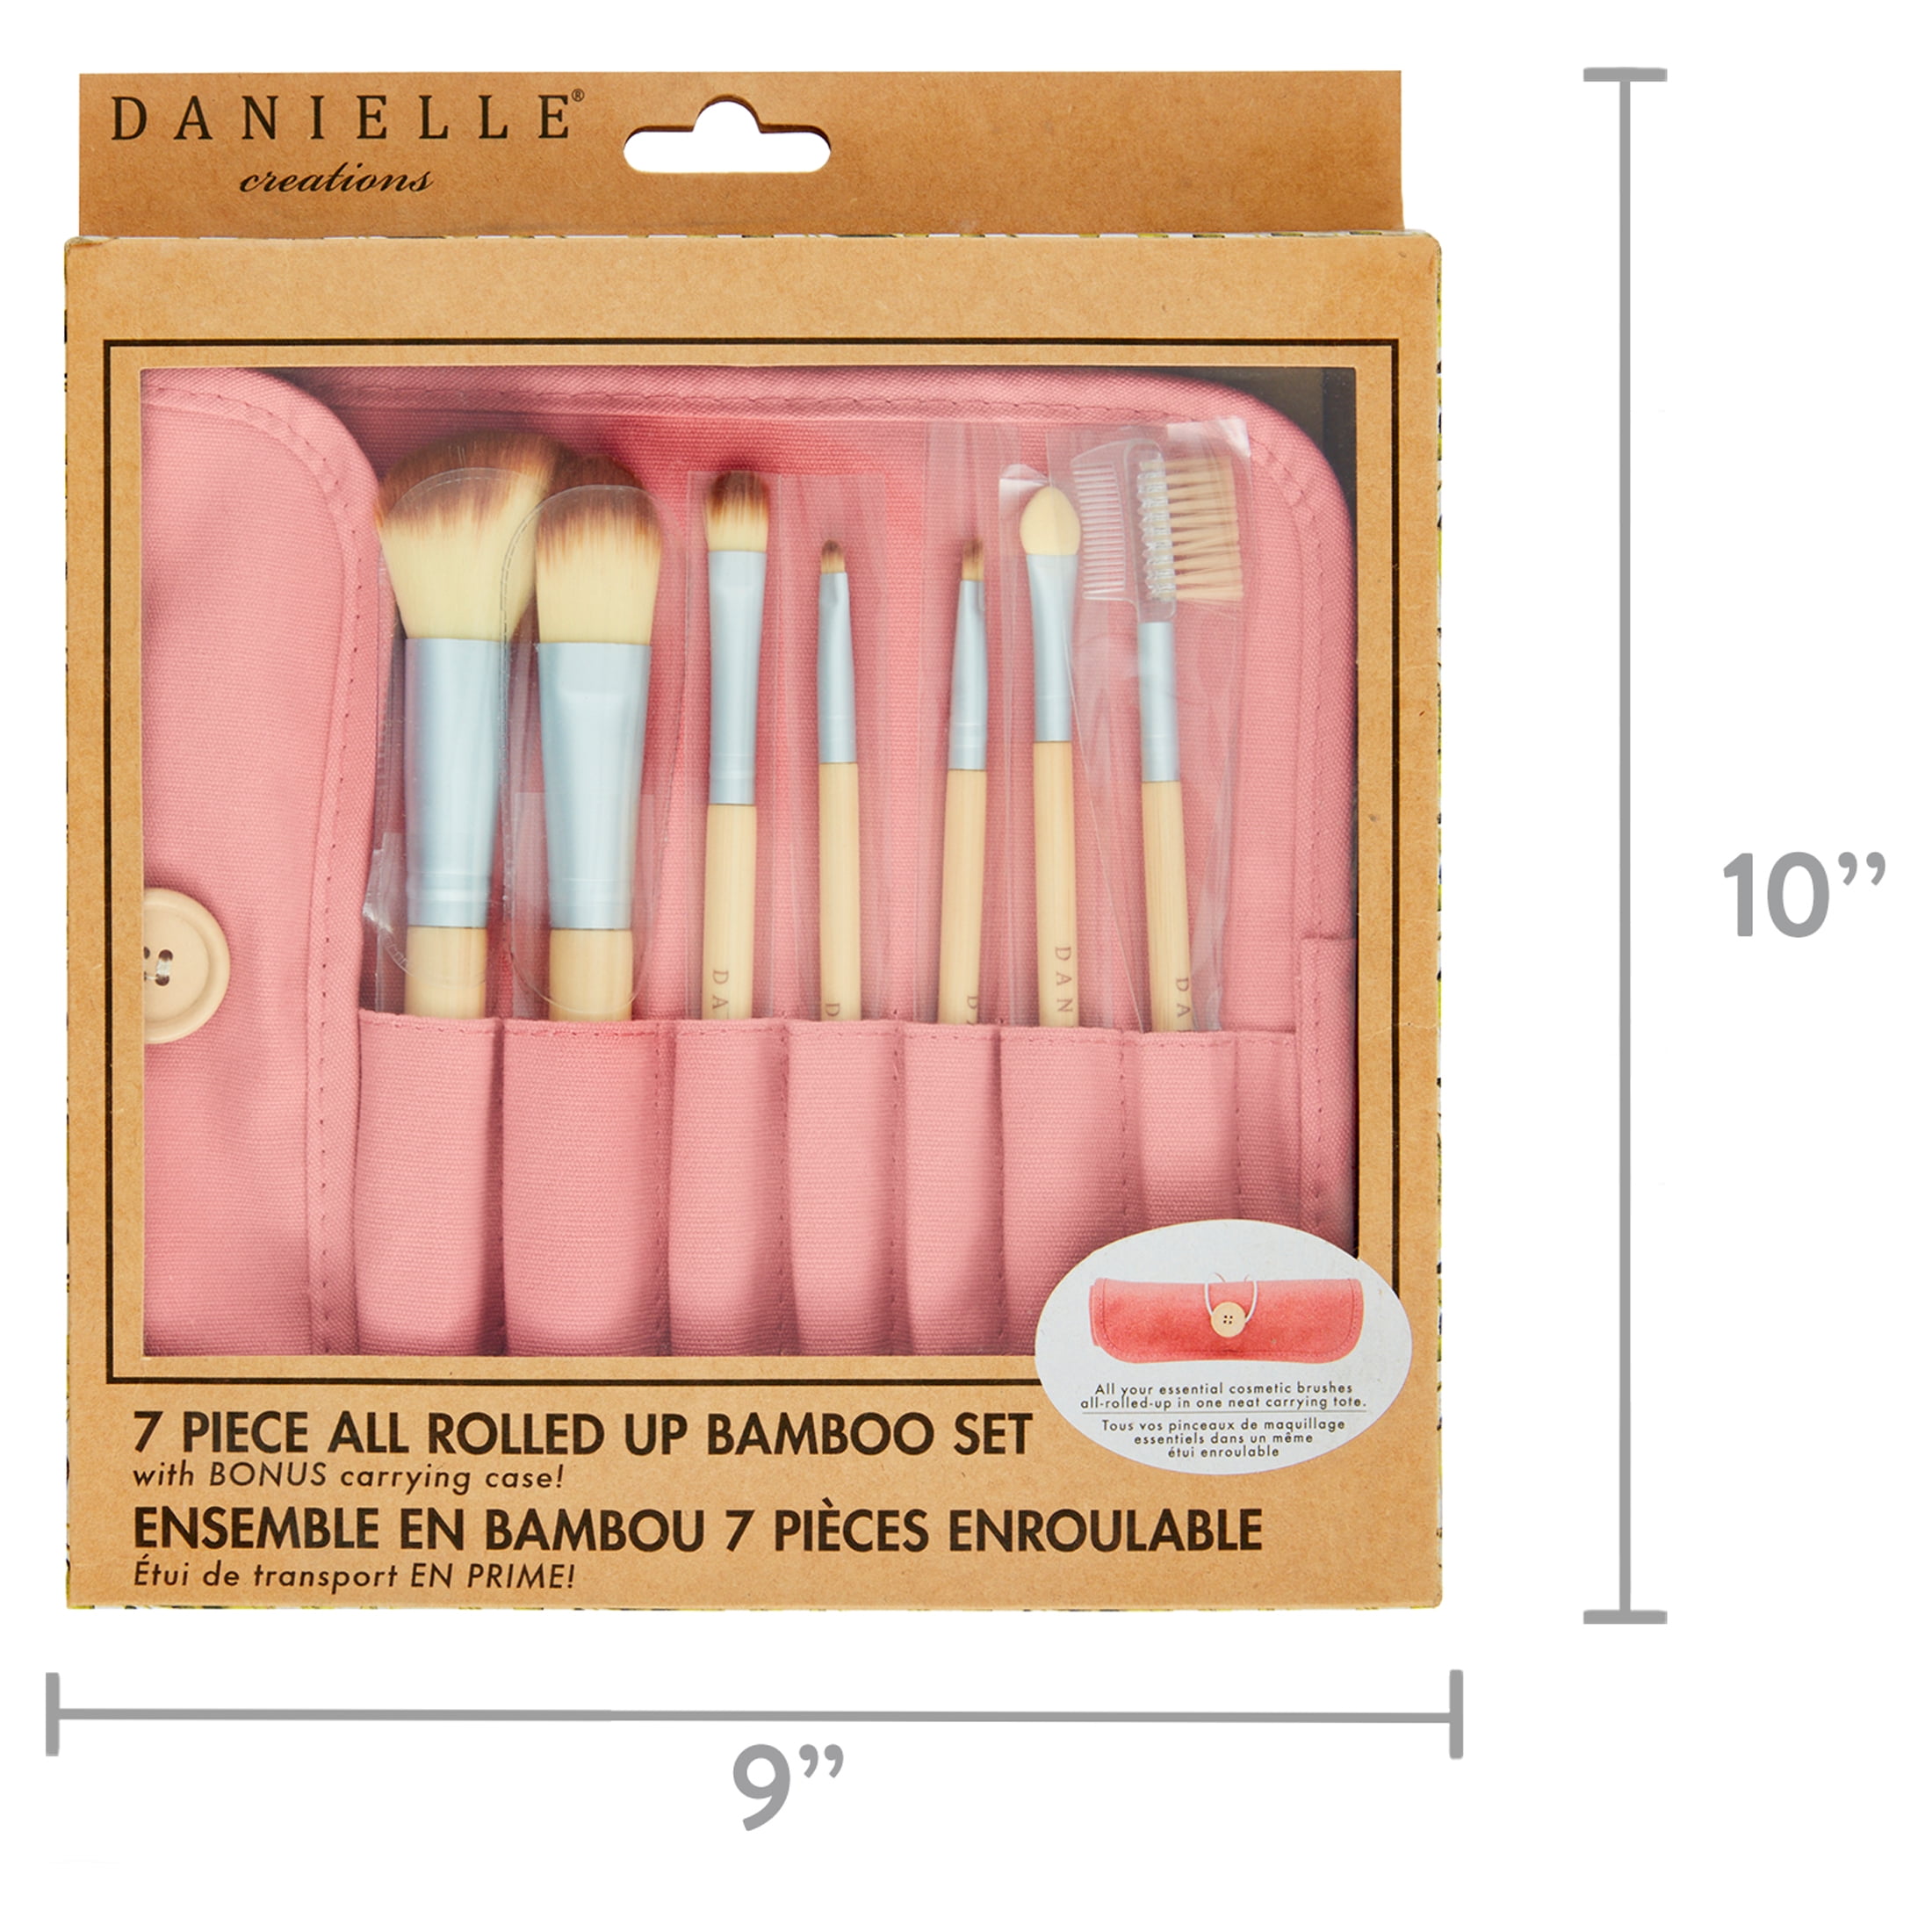 Danielle Bamboo Roll Up Brush Set Pink